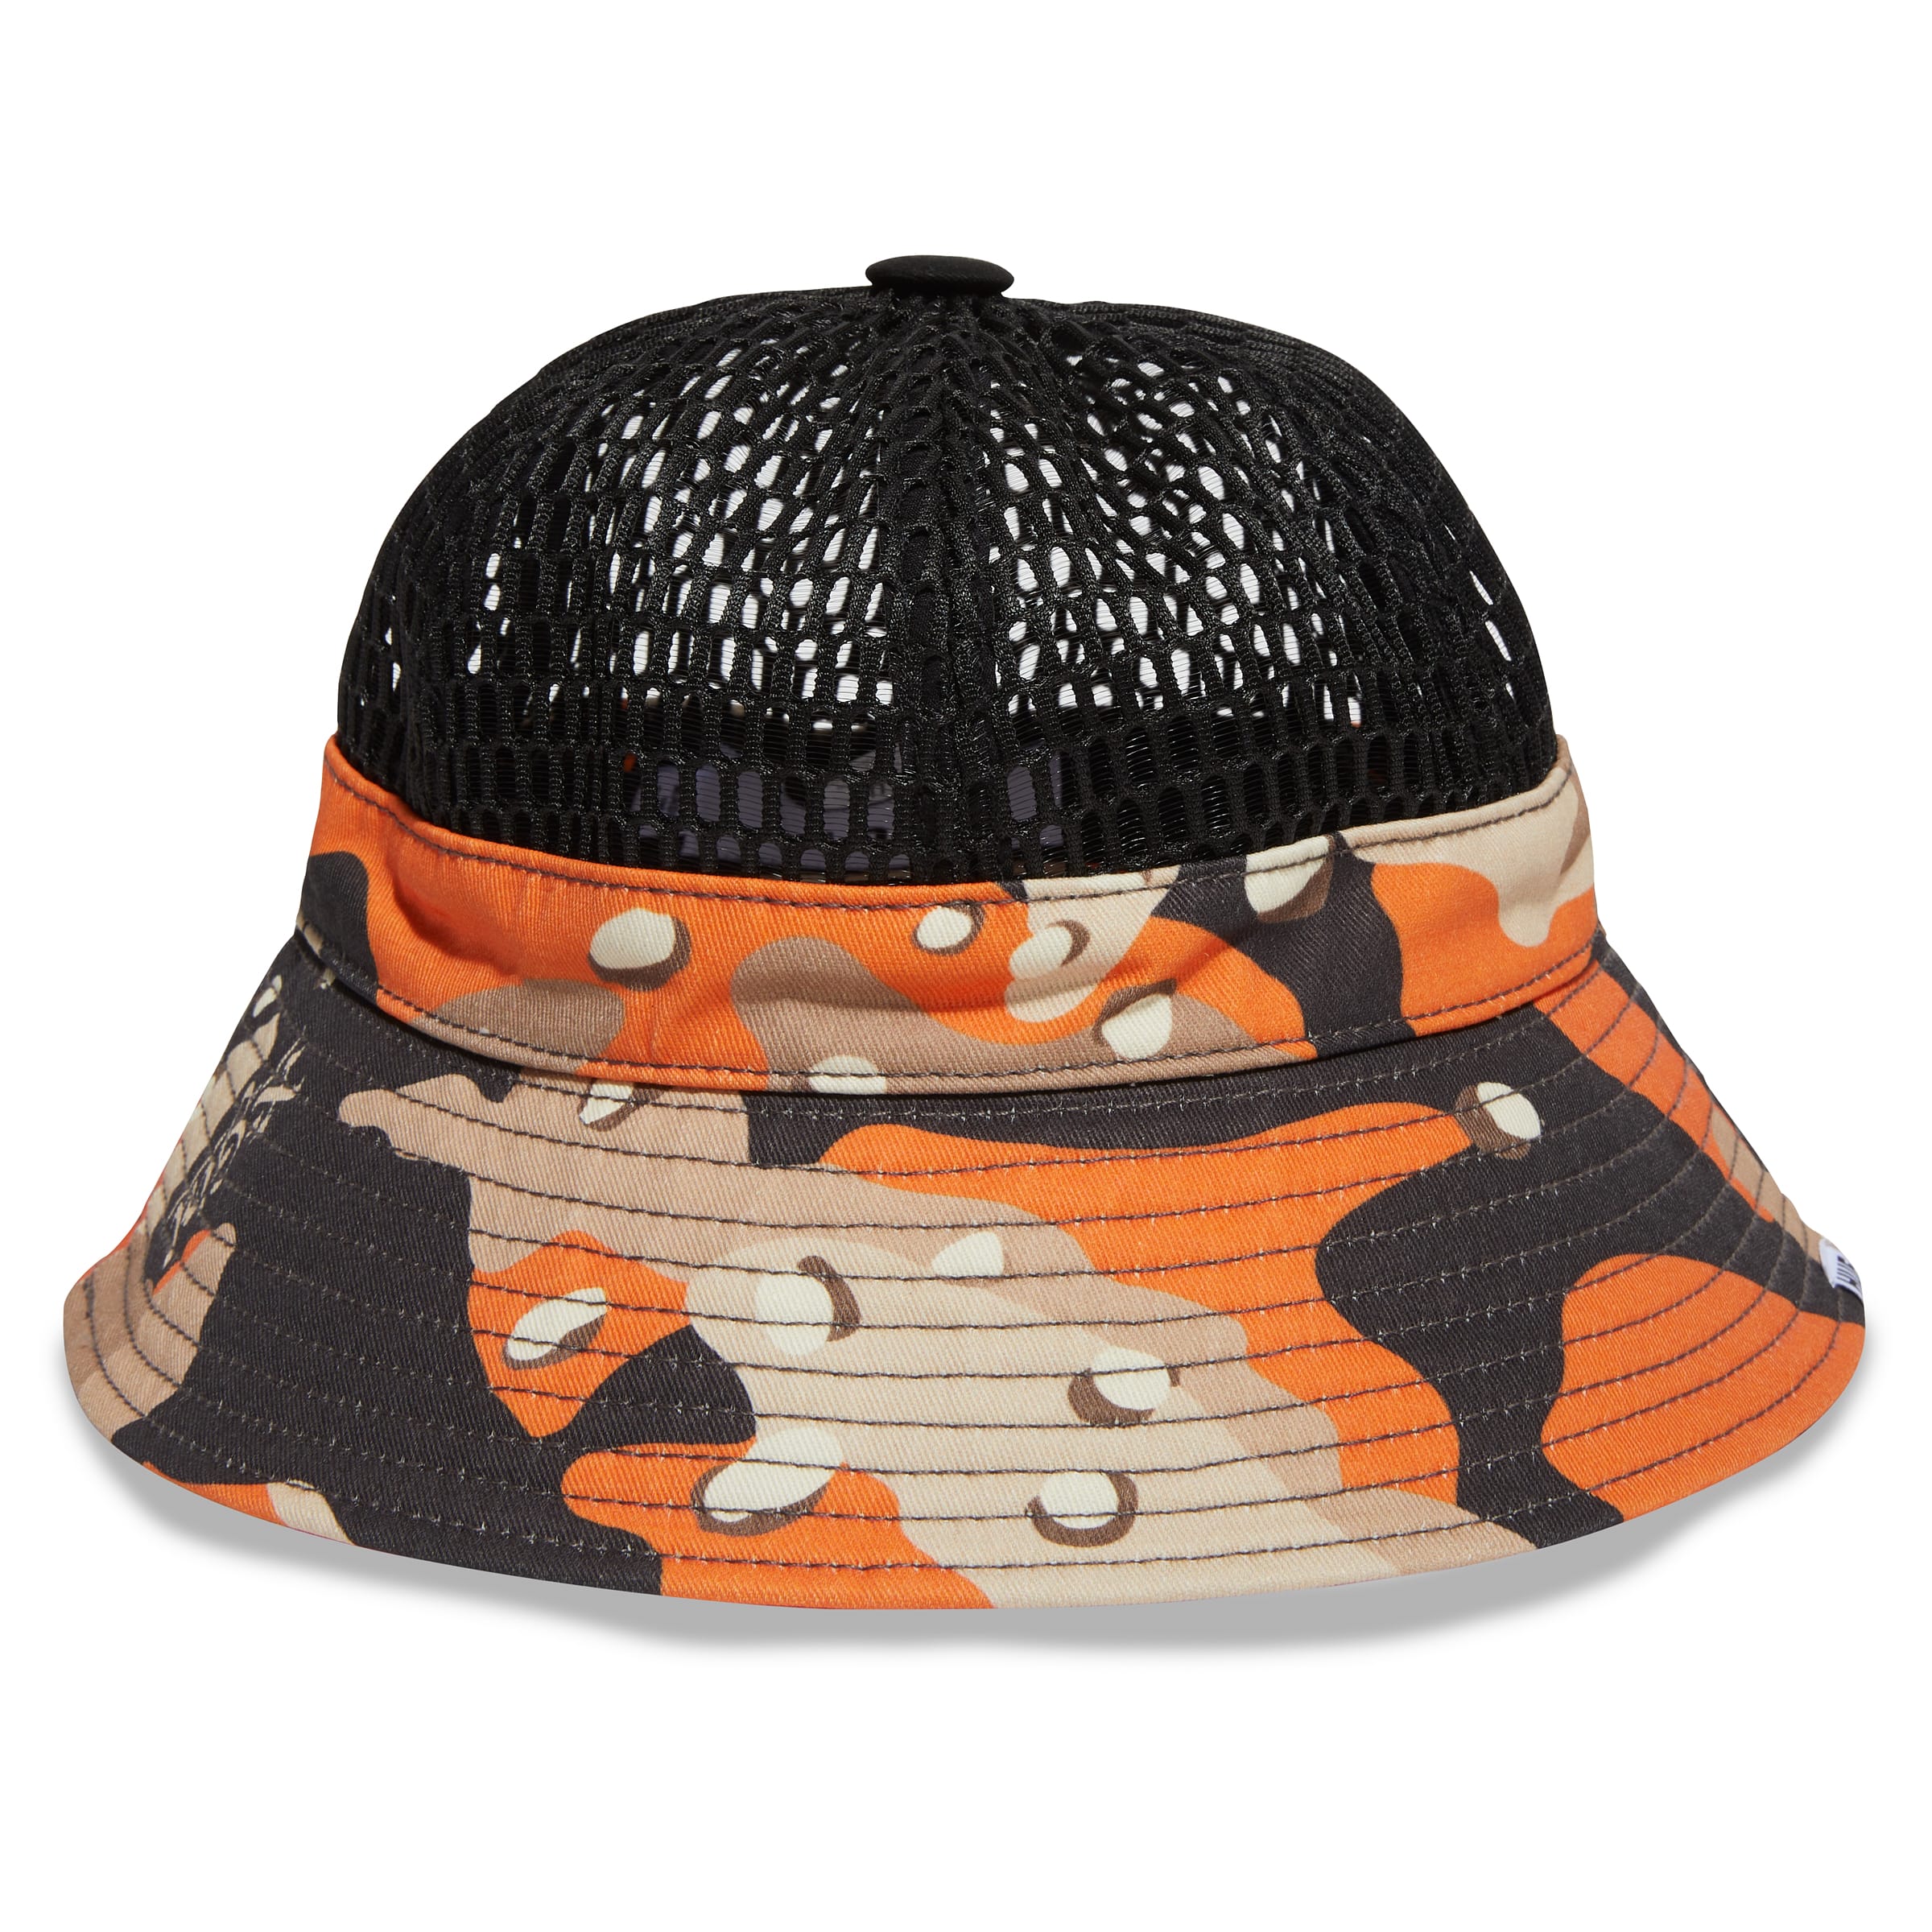 Don Dada Mesh Bucket Hat